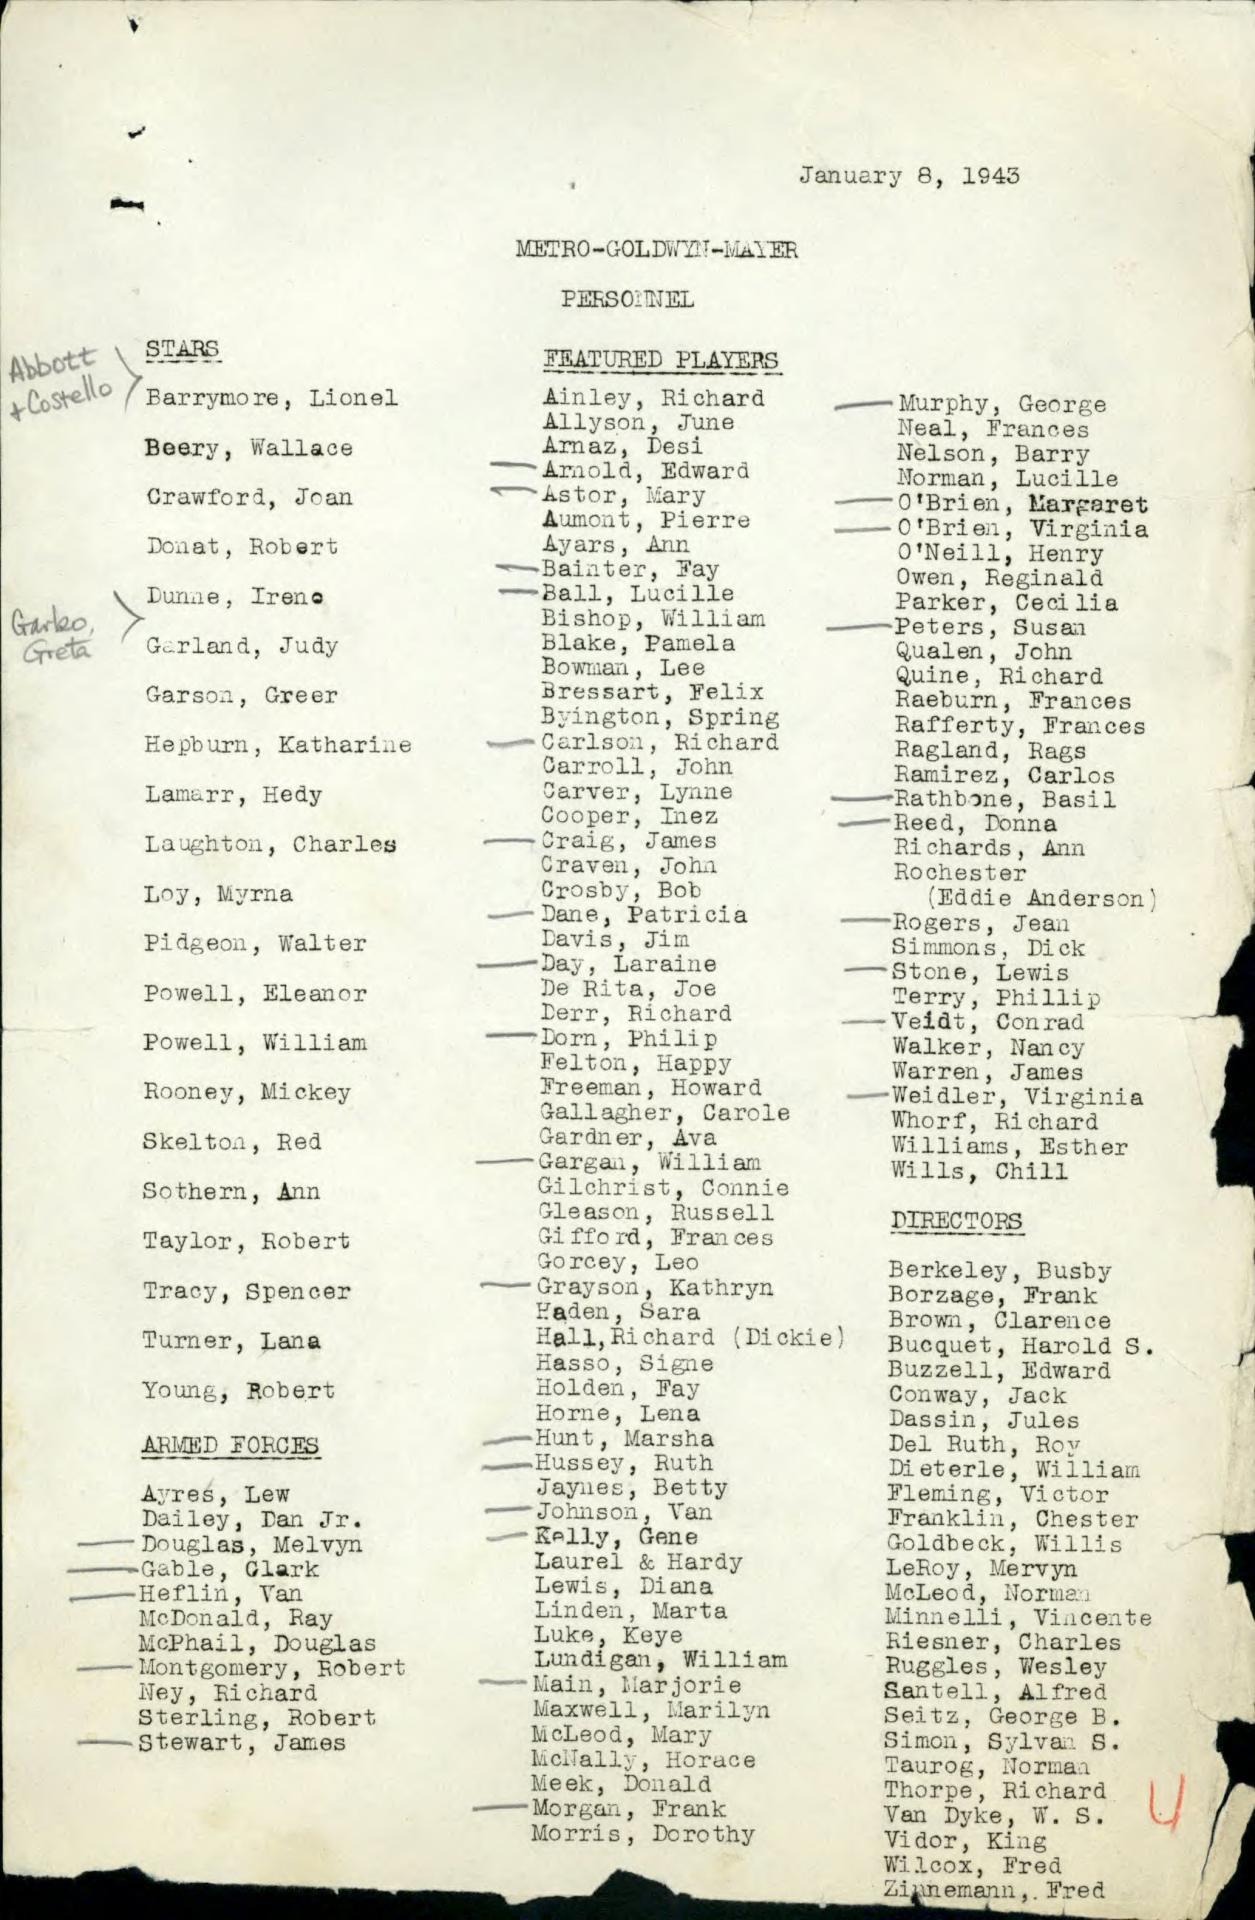 427 squadron list of stars metro goldwyn mayer 1943